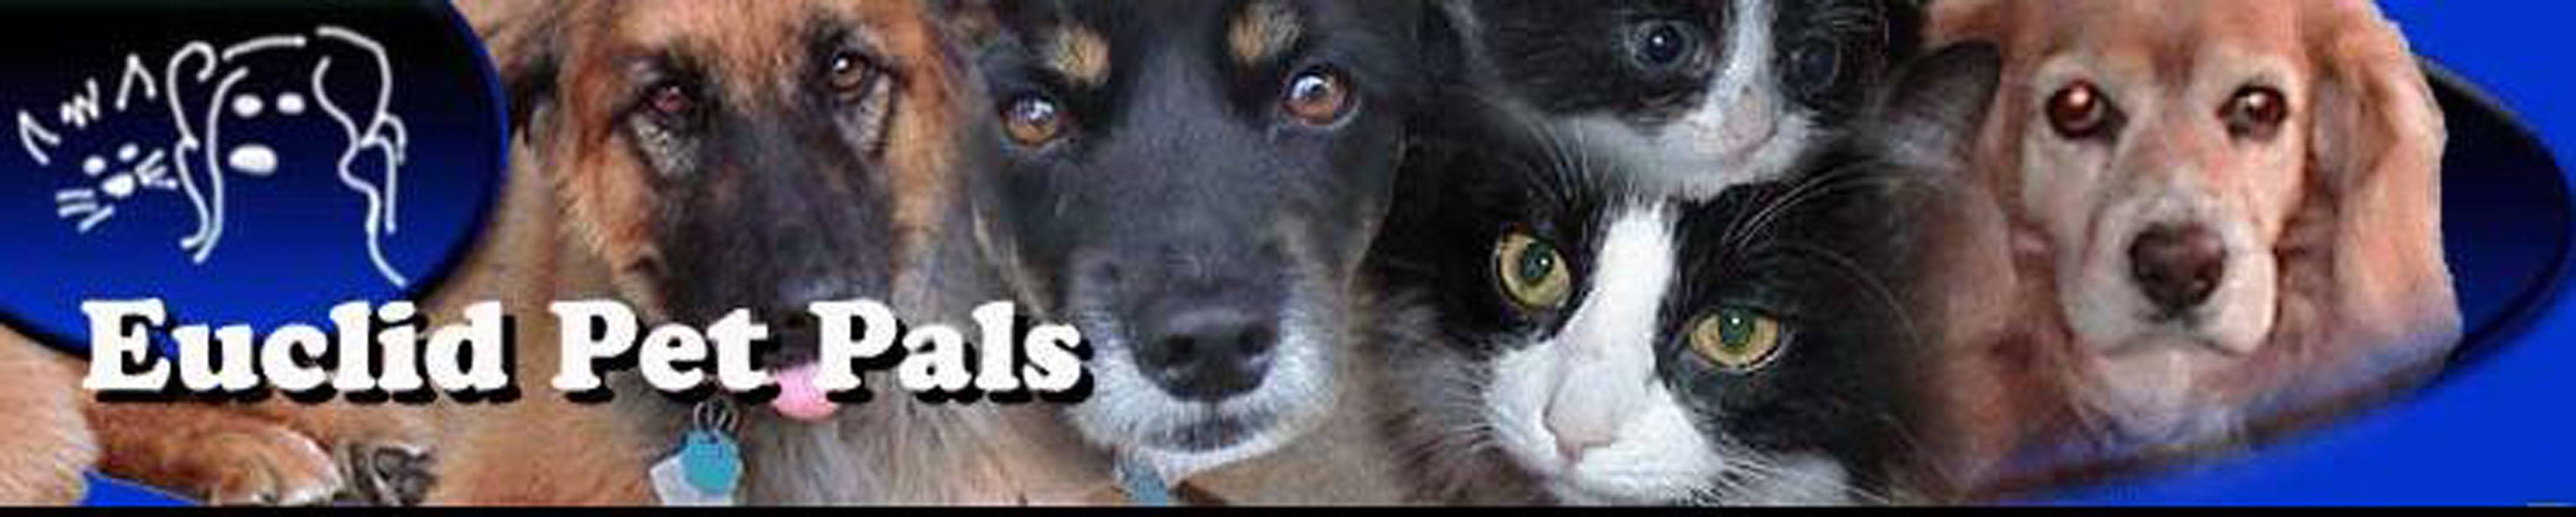 Pet Pals Bark-B-Q Hosted by Euclid Pet Pals Cover Photo